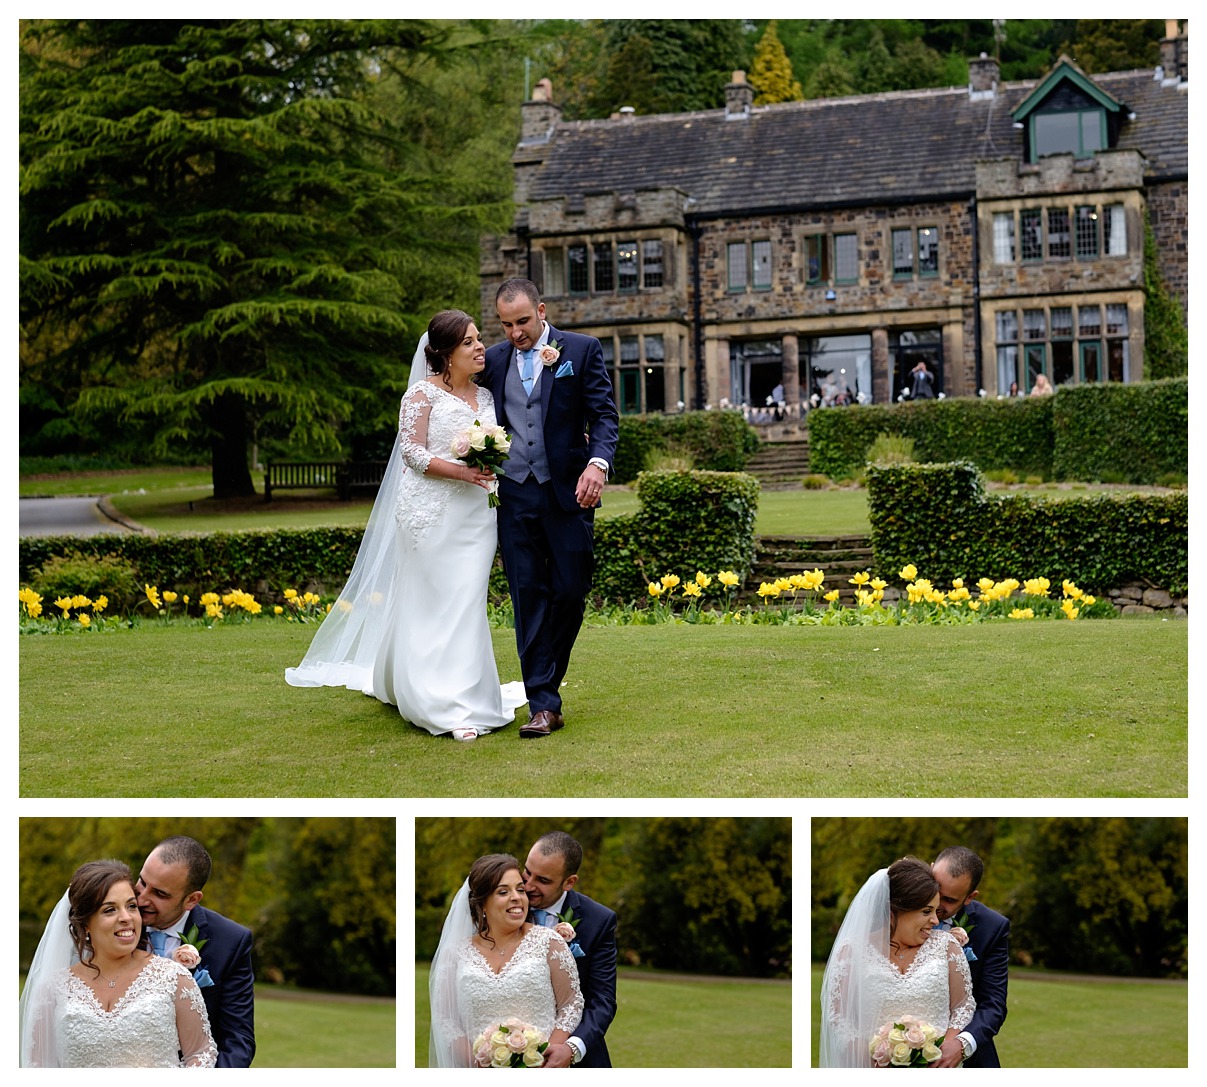 Whirlowbrook Hall wedding by Sheffield qwedding photographer Chris Loneragan 051700017